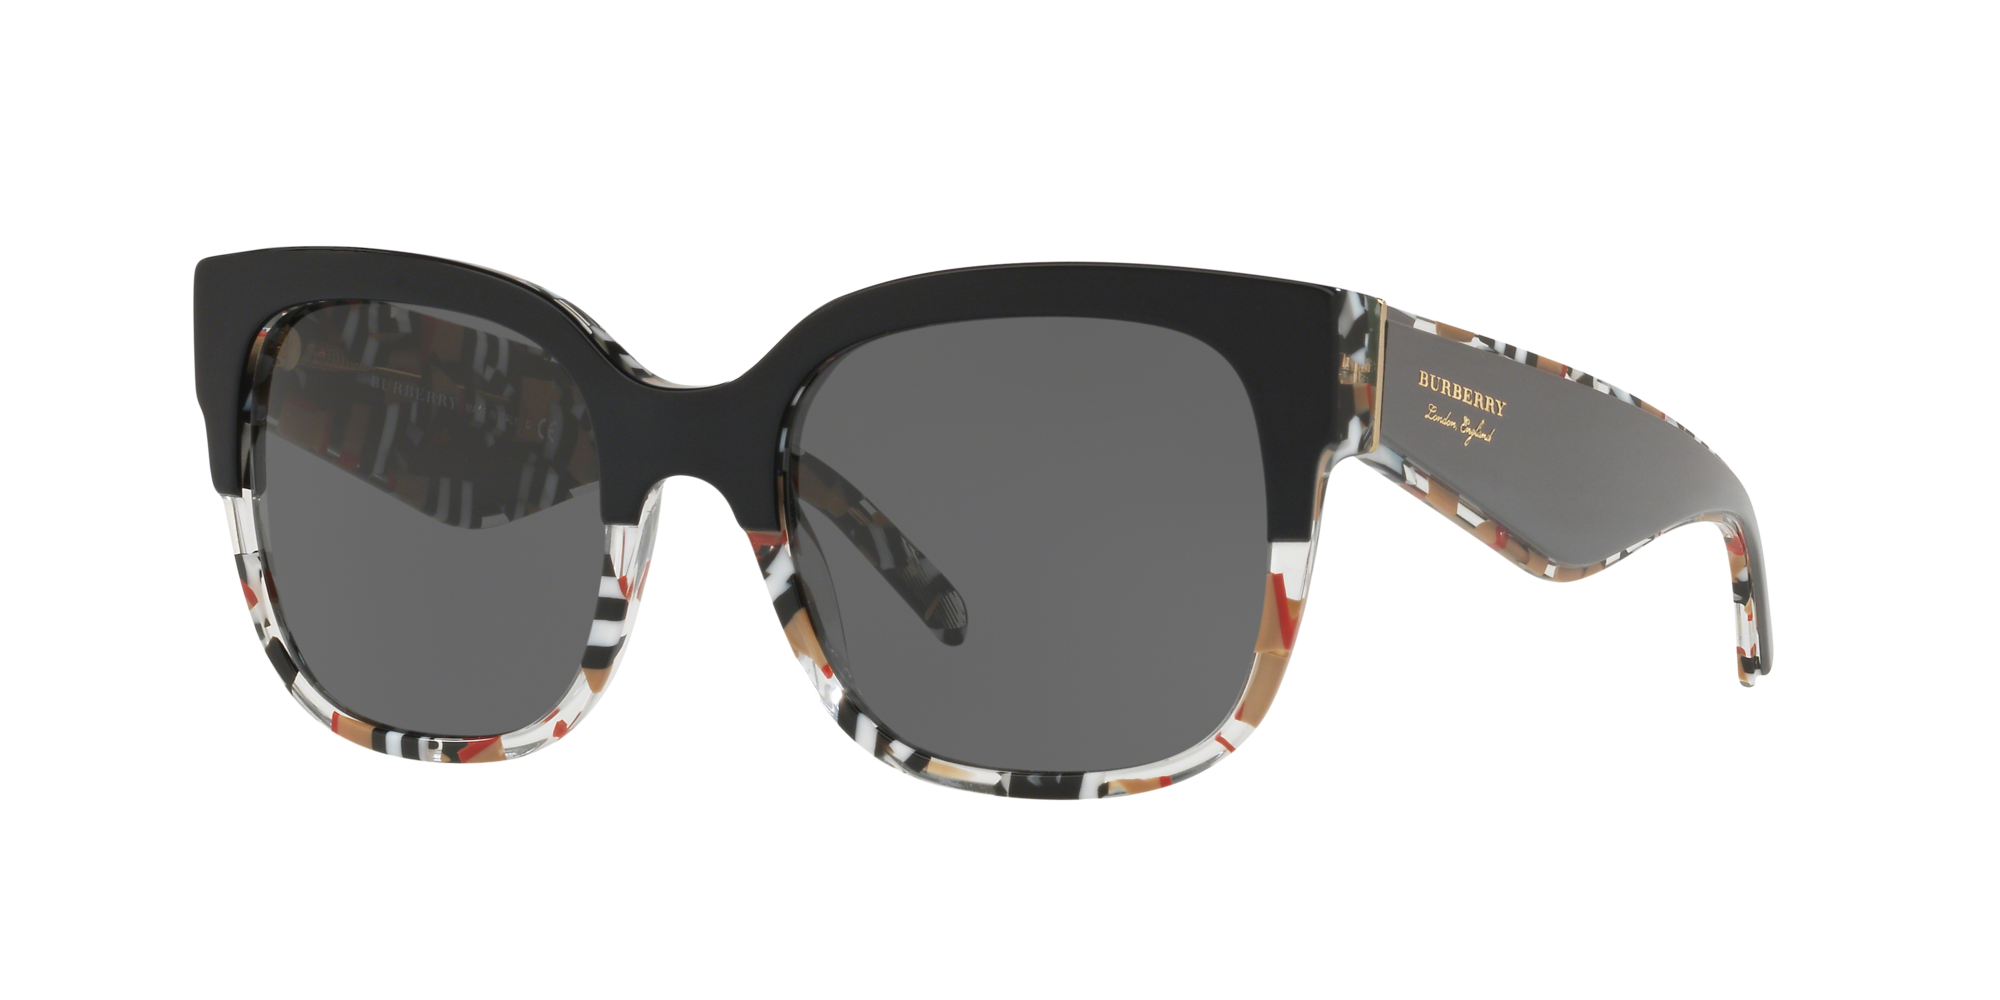 burberry sunglasses womens sale